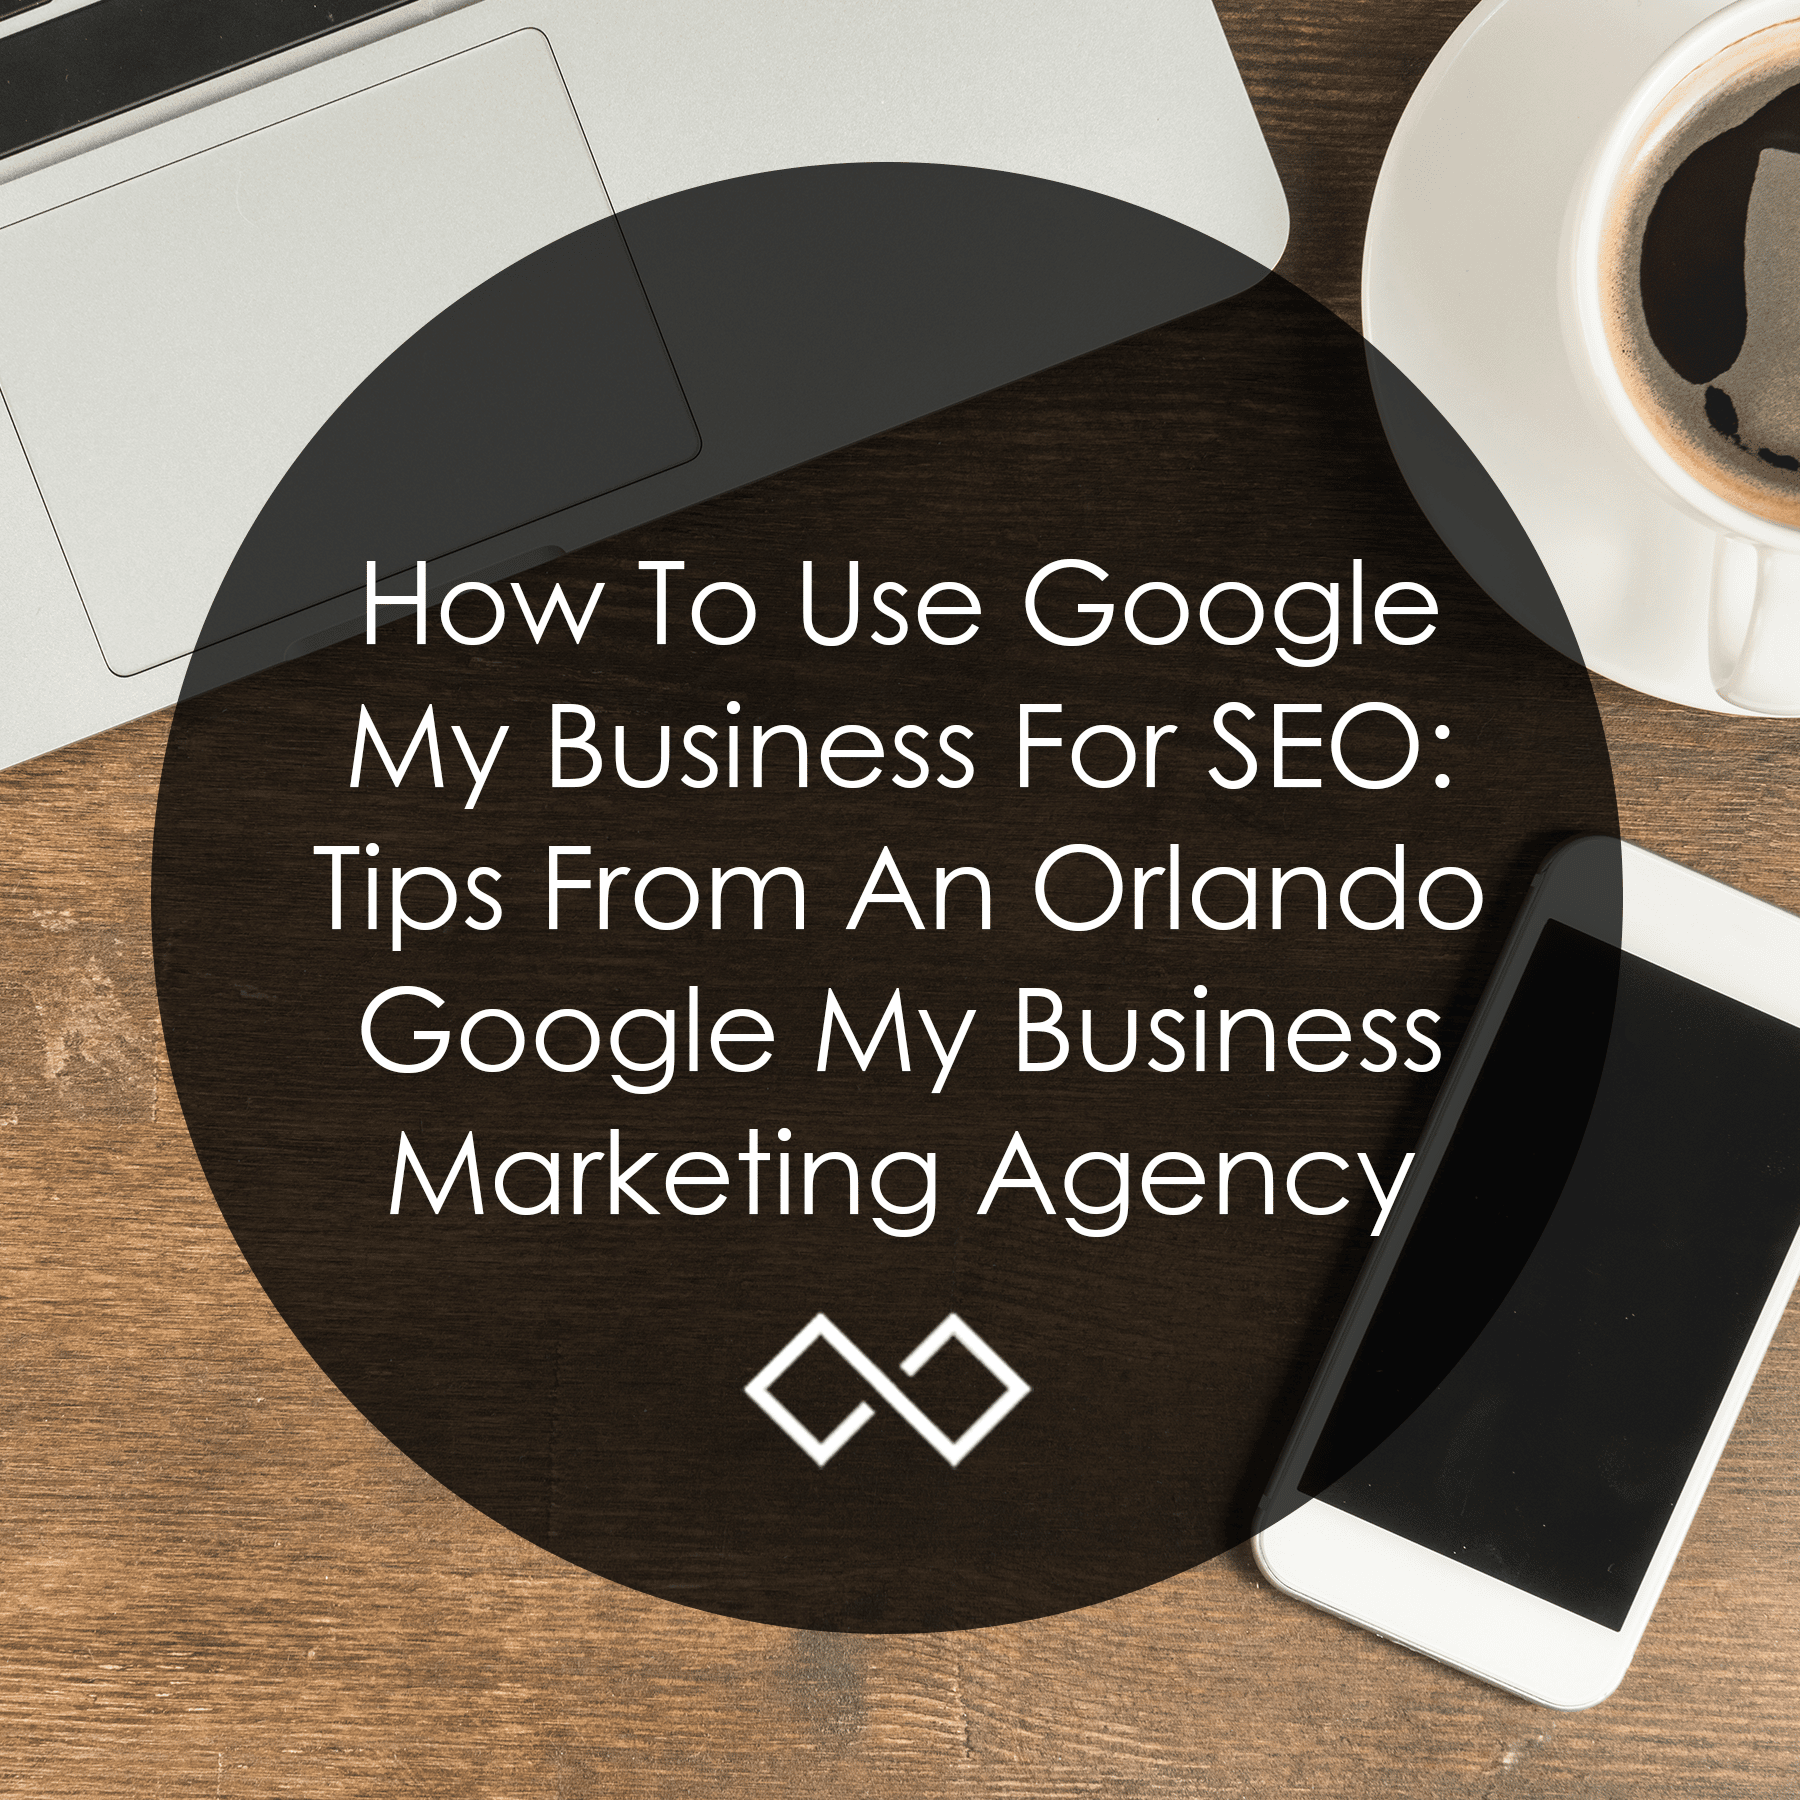 Orlando Google My Business Marketing Agency